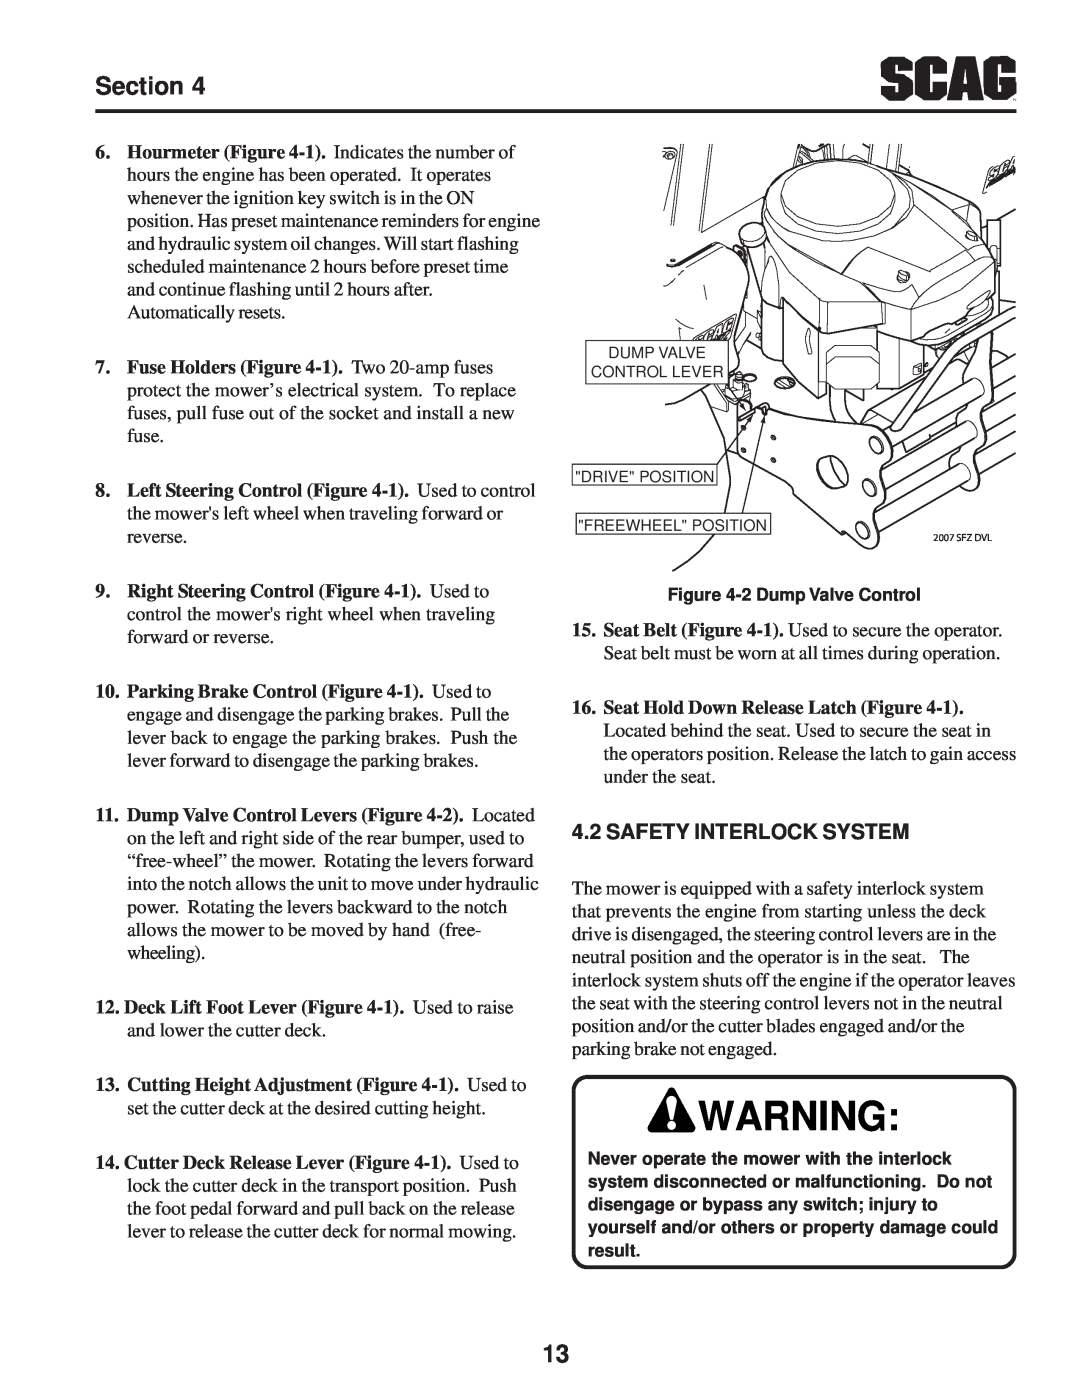 Scag Power Equipment SFZ manual Safety Interlock System, 2 Dump Valve Control 